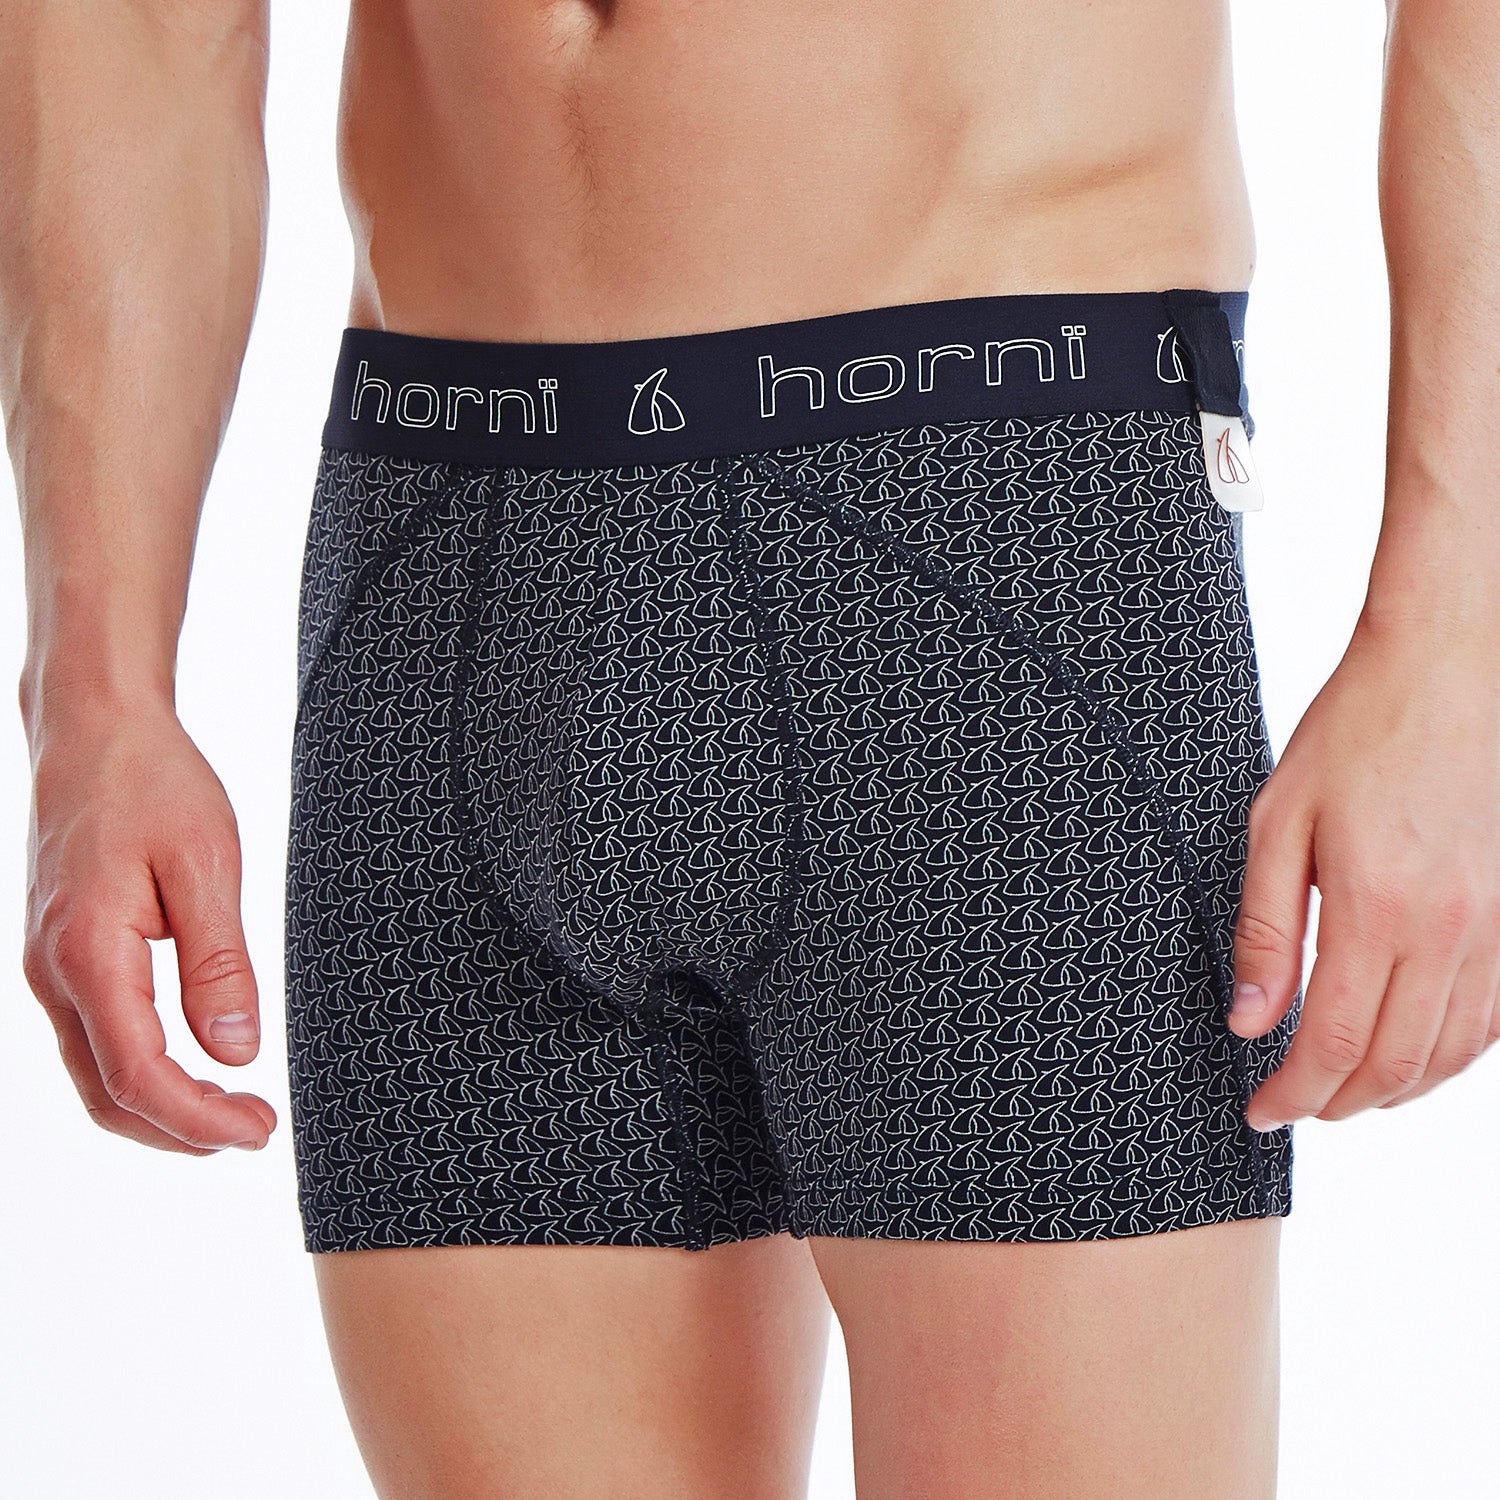 horni black panther boxer briefs horn pattern – hornï underwear